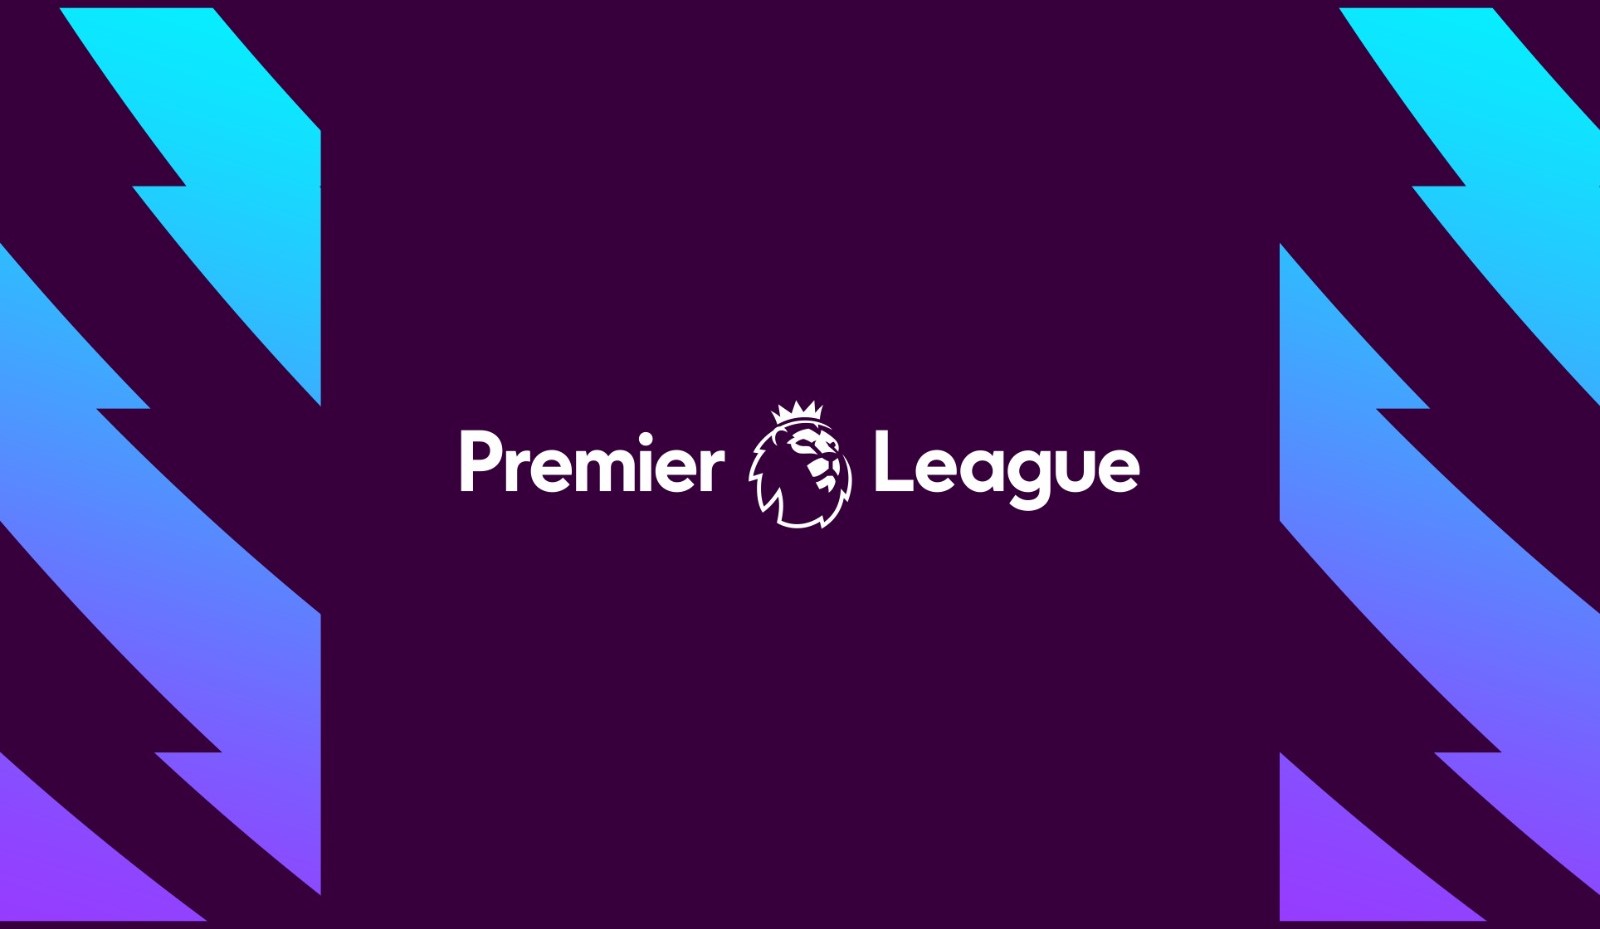 Các câu lạc bộ Premier League lập kỷ lục DOANH THU